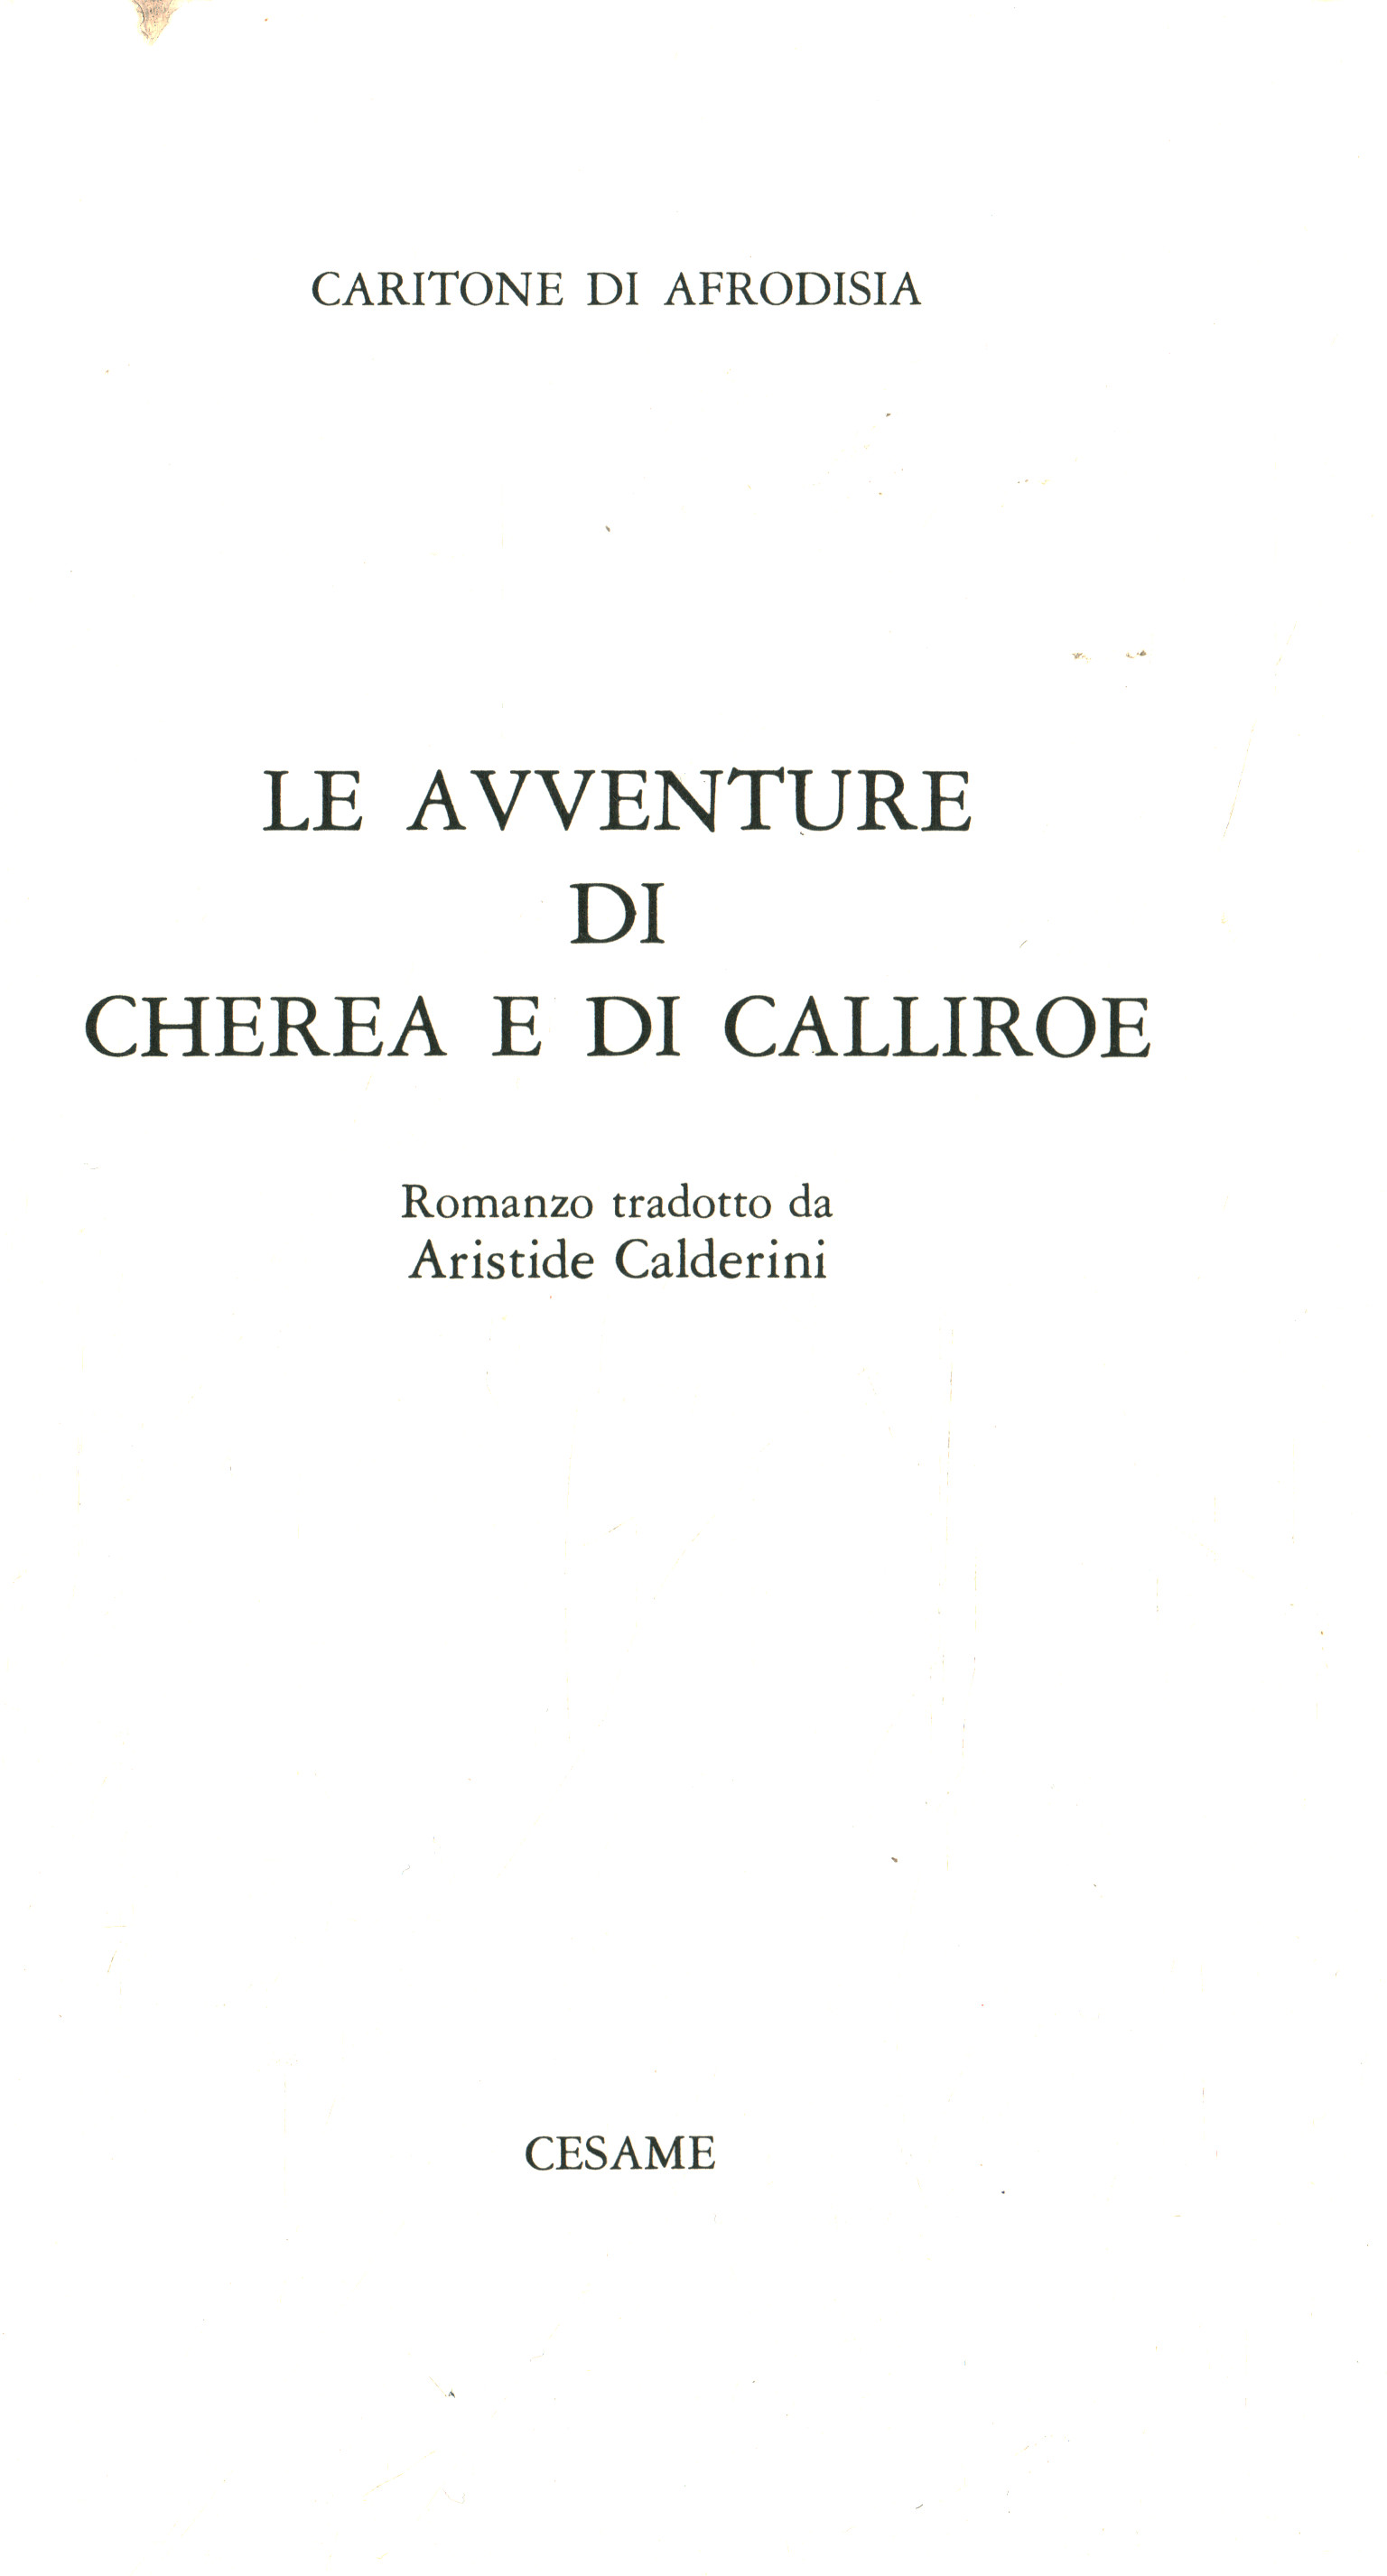 The Adventures of Cherea and Calliroe